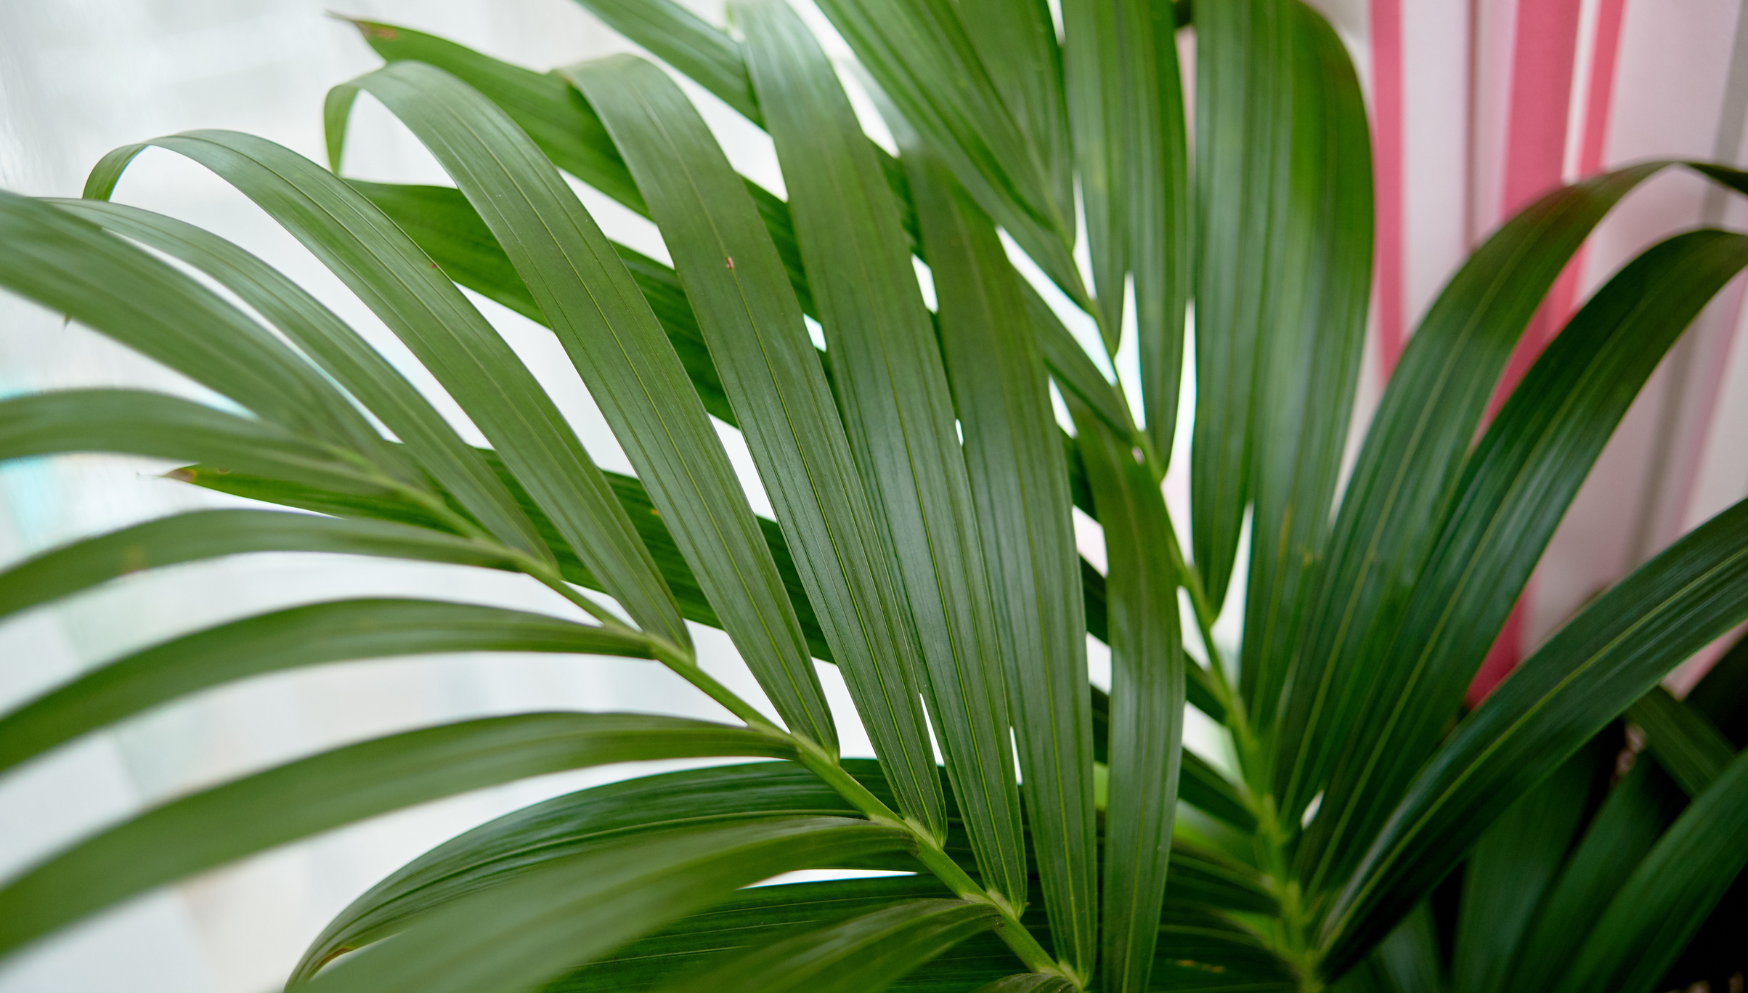 Areca palm leaves